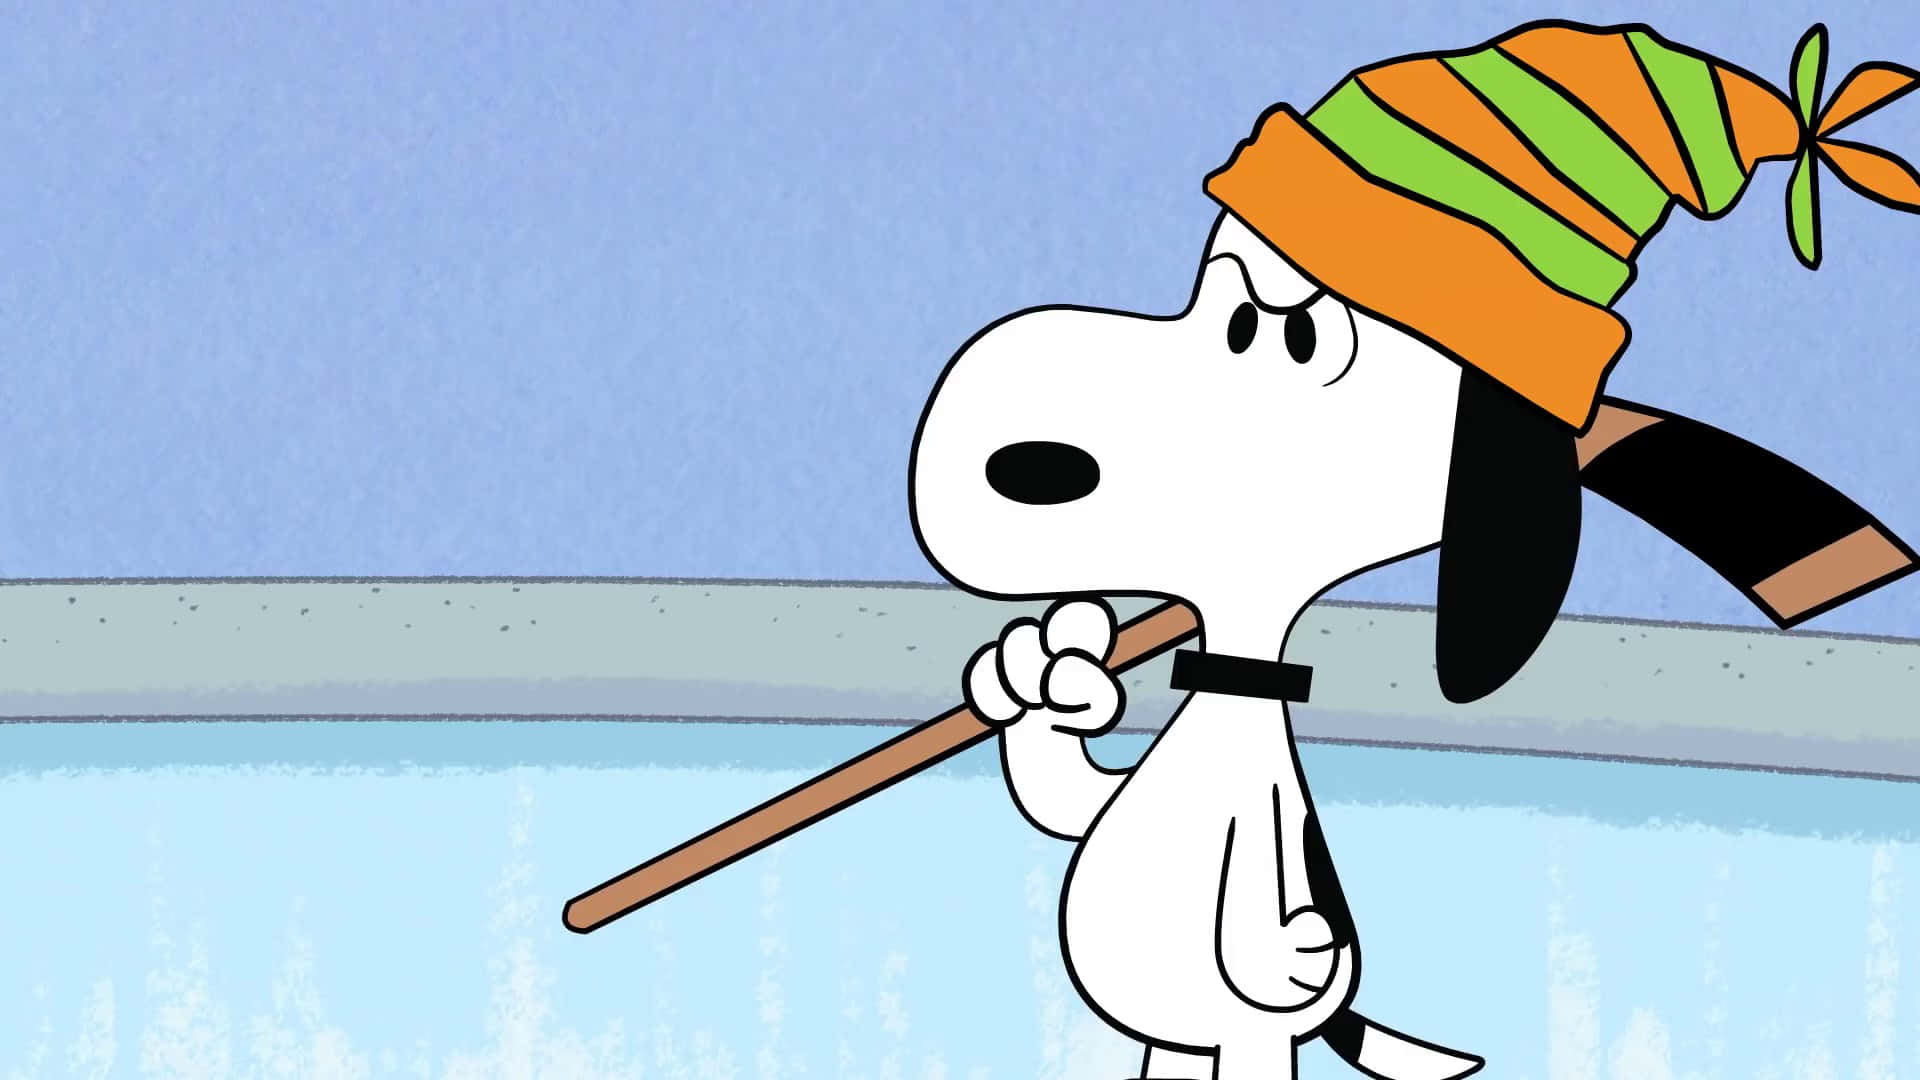 Bilddes Snoopy-cartooncharakters